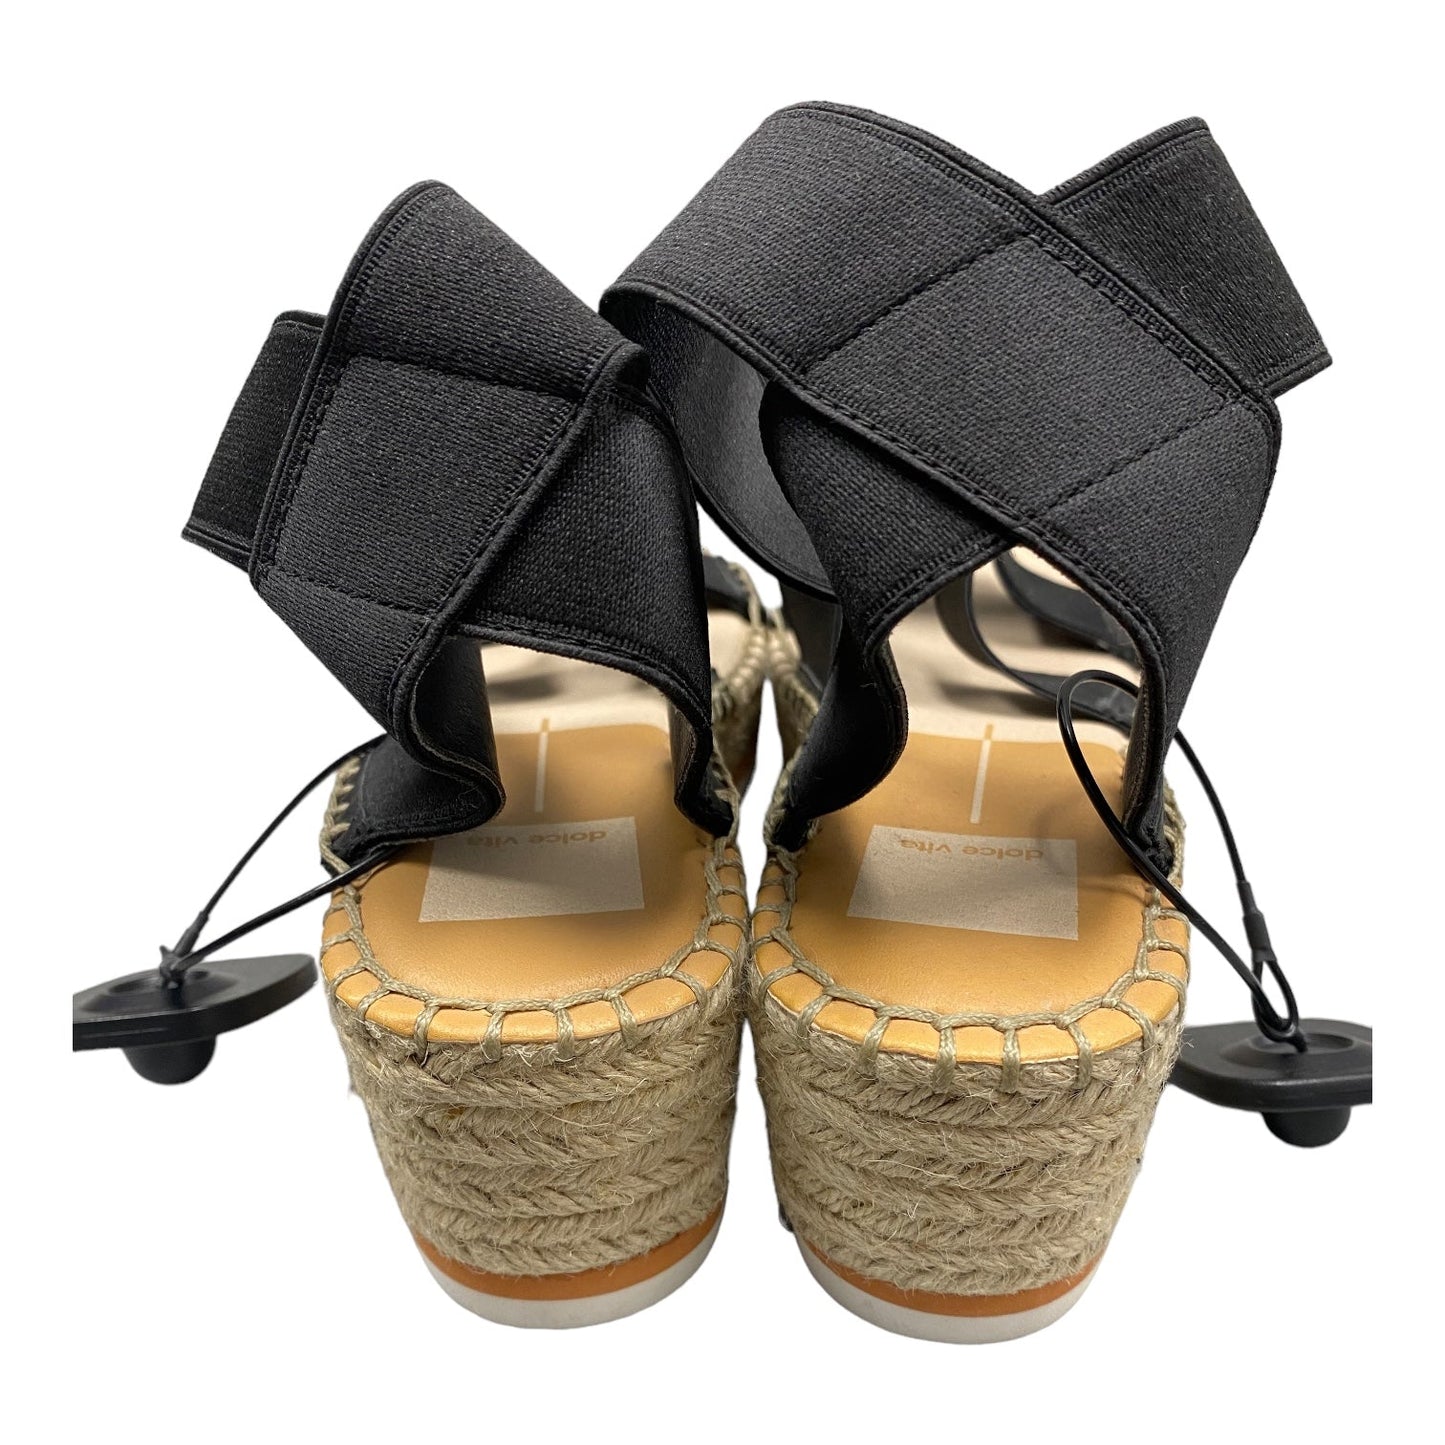 Black & Tan Sandals Heels Platform Dolce Vita, Size 10